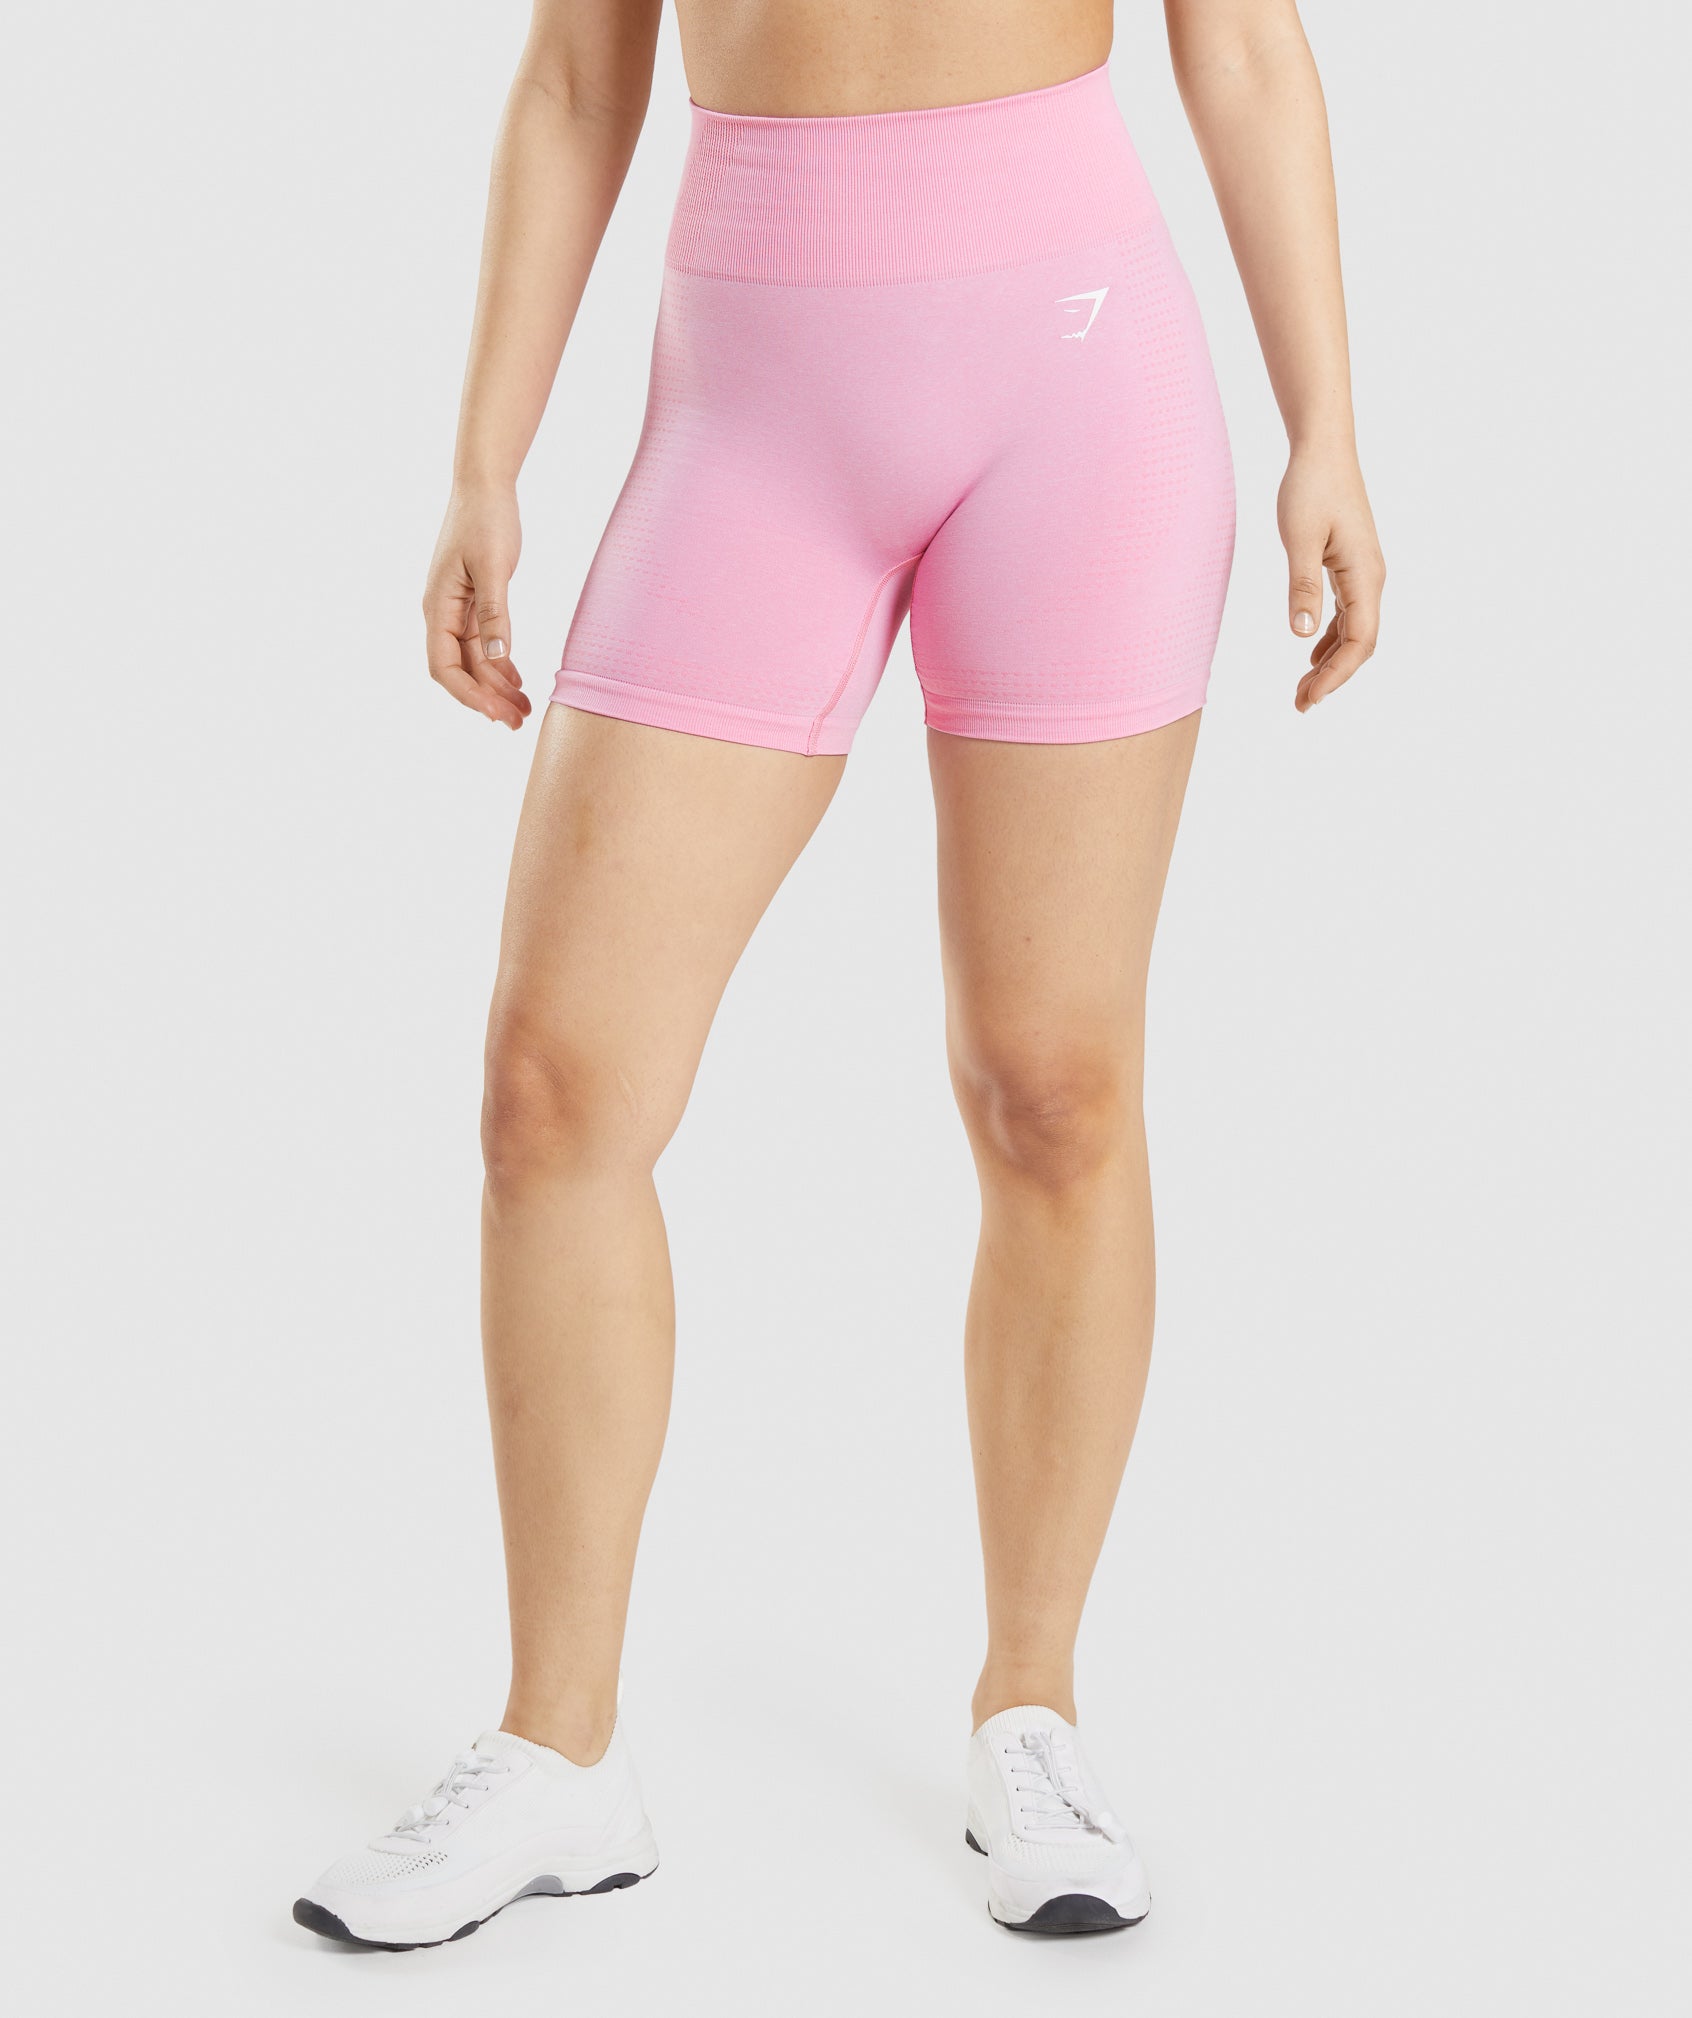 Vital Seamless 2.0 Shorts in Sorbet Pink Marl - view 1